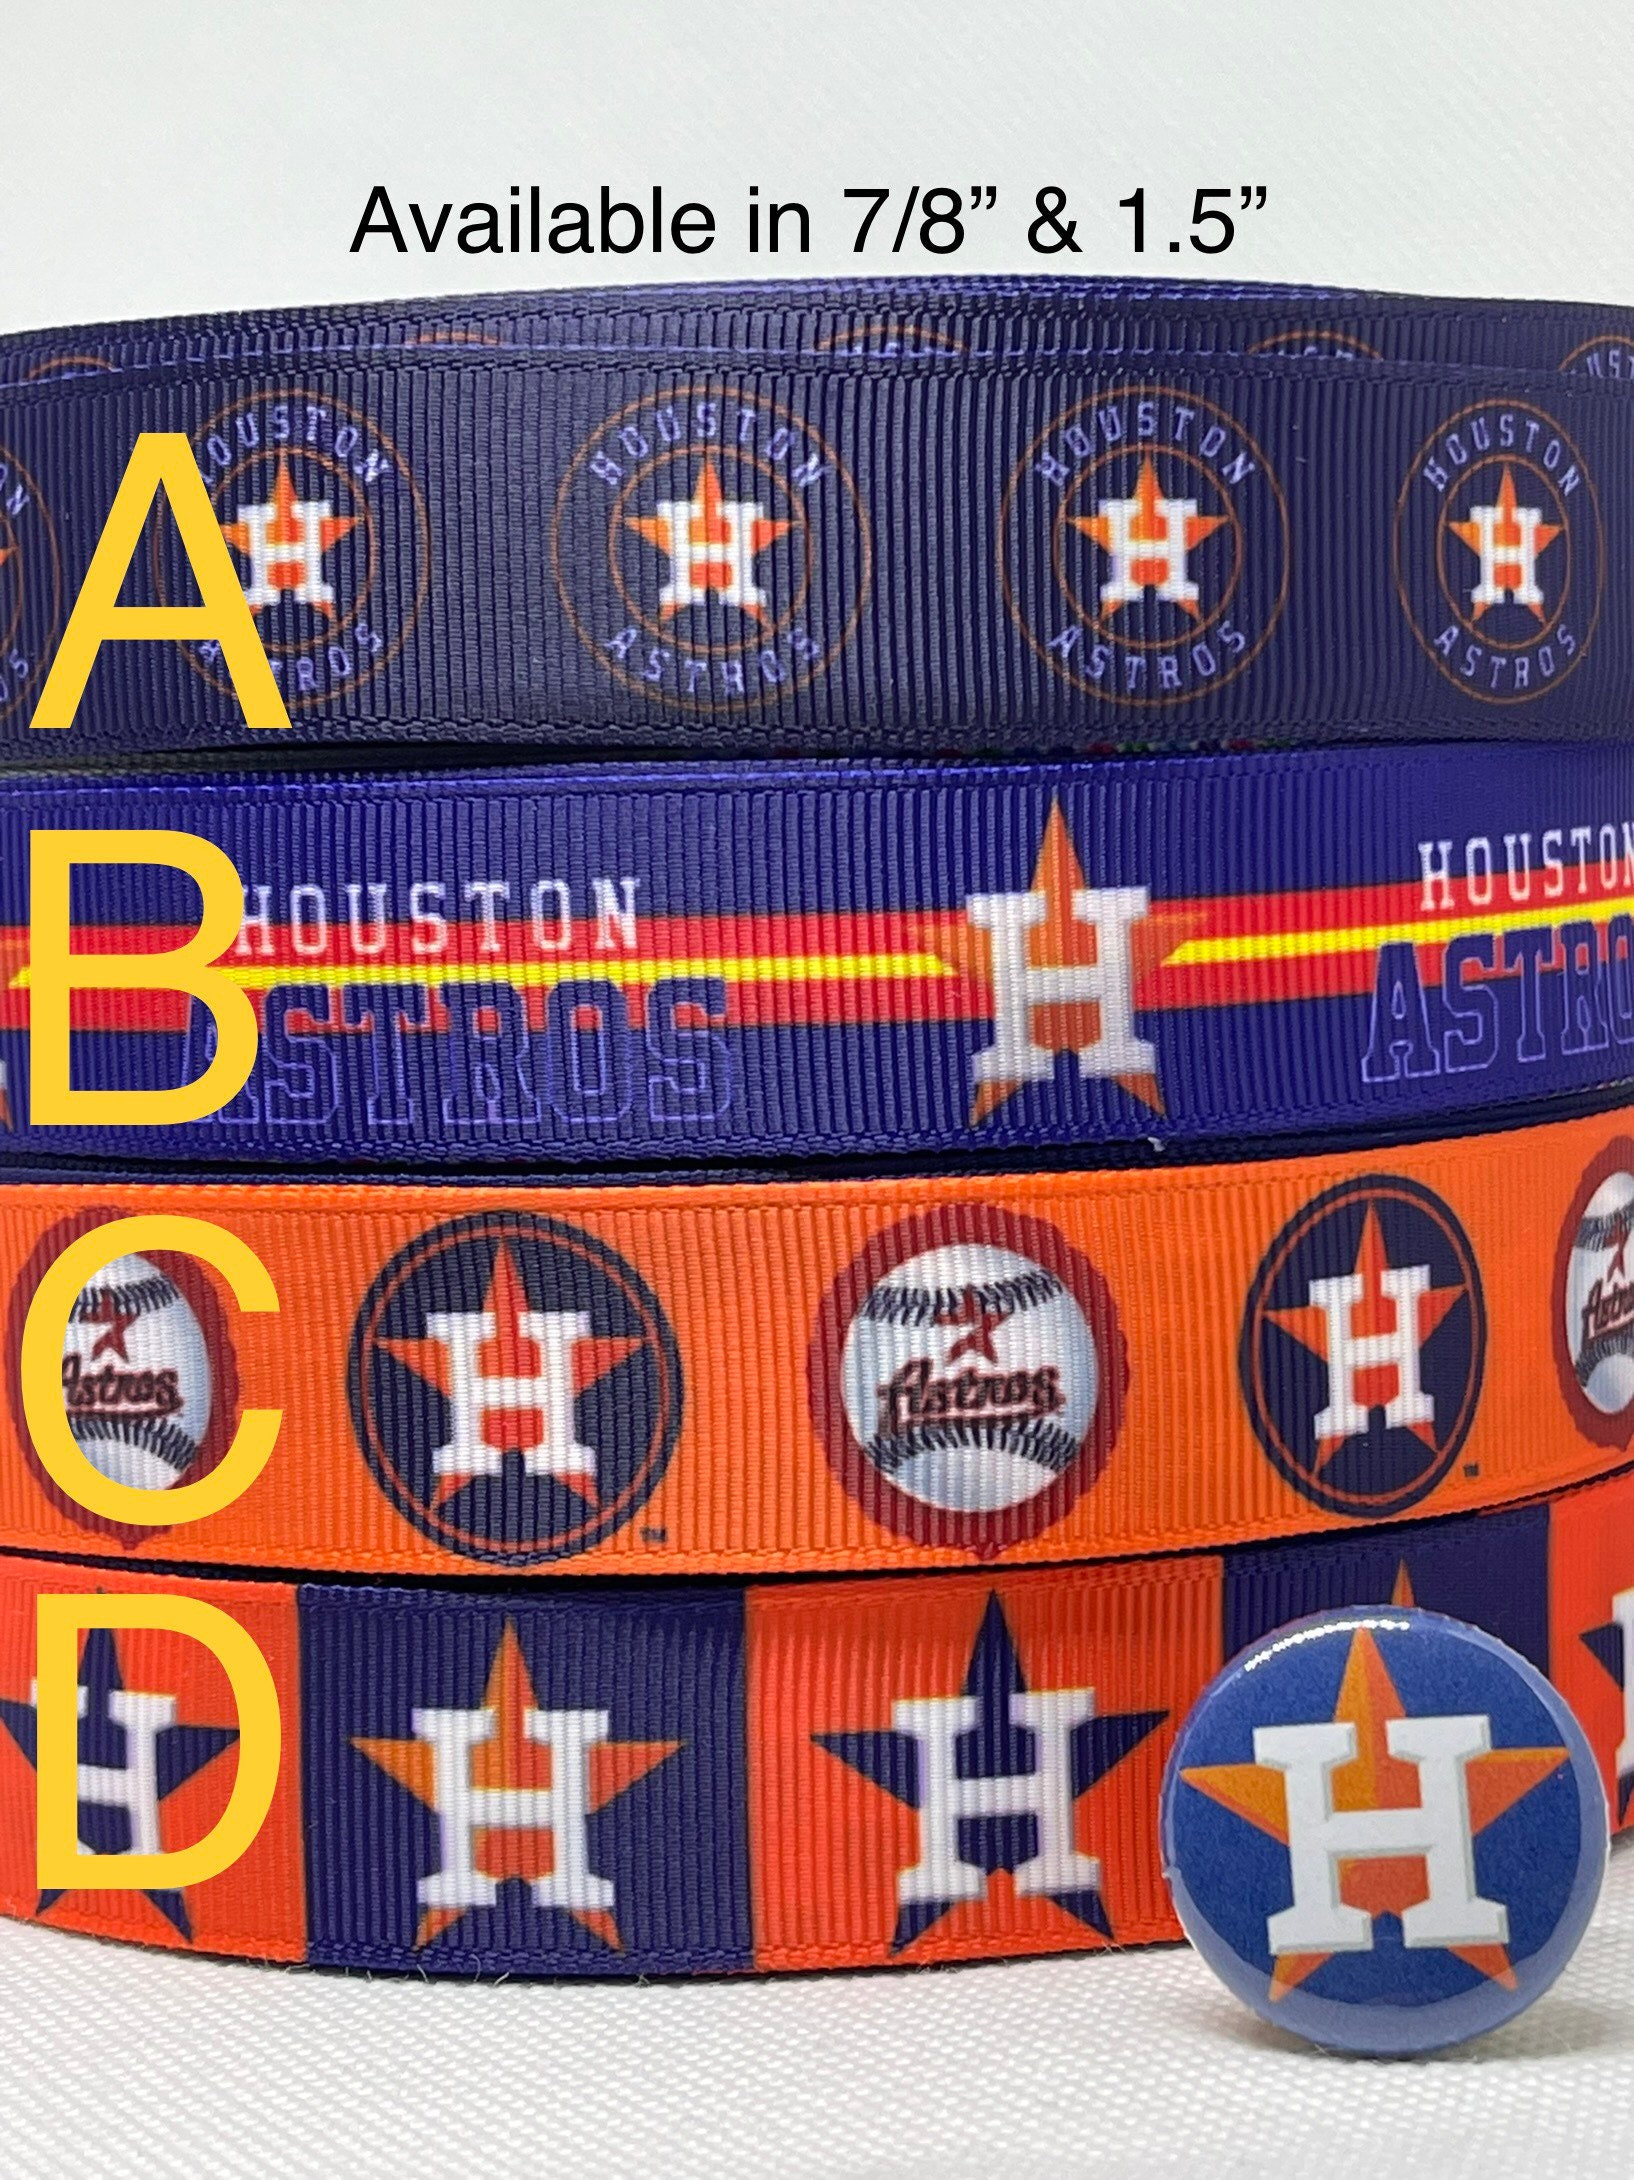 Houston Astros H Logo Star Background Crush City & Graffiti